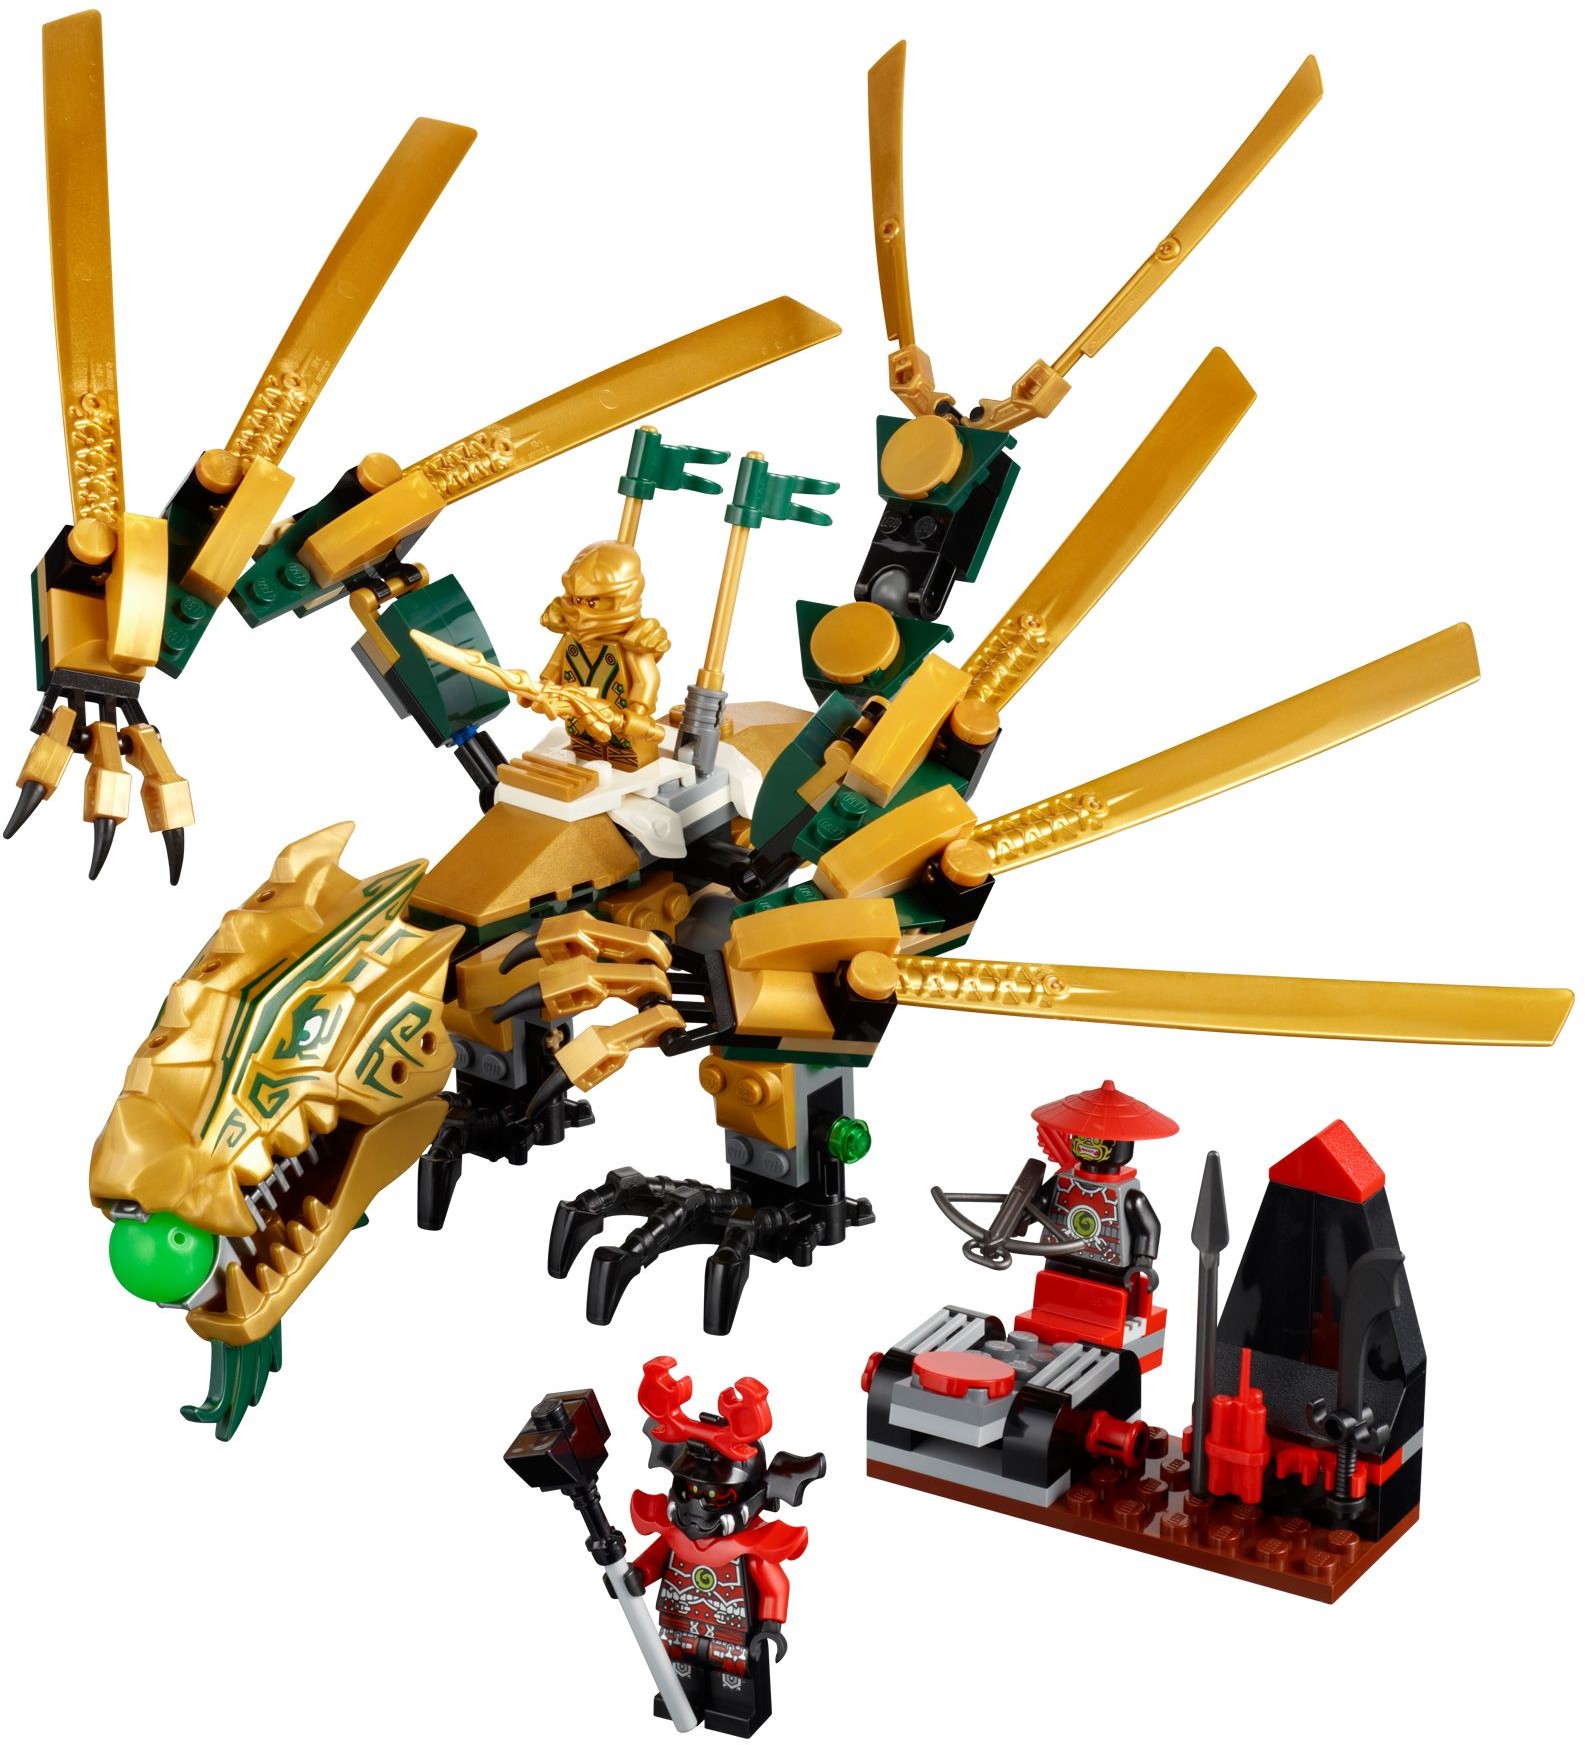 Ninjago | 2013 | Brickset: LEGO set 